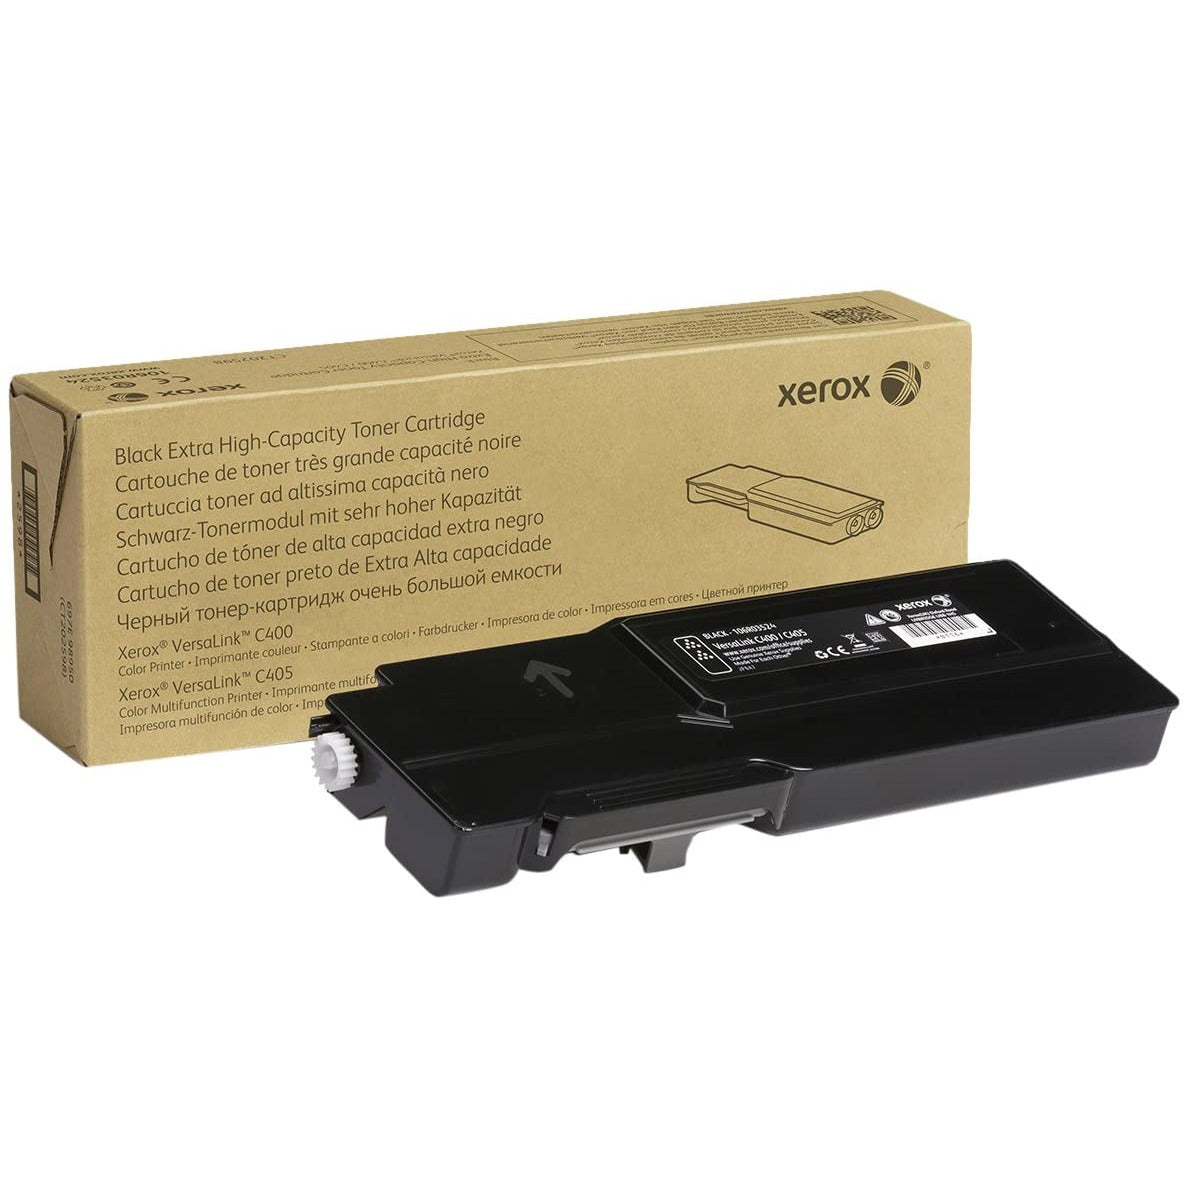 Xerox VersaLink C400/C405 Black Extra High Capacity Toner Cartridge